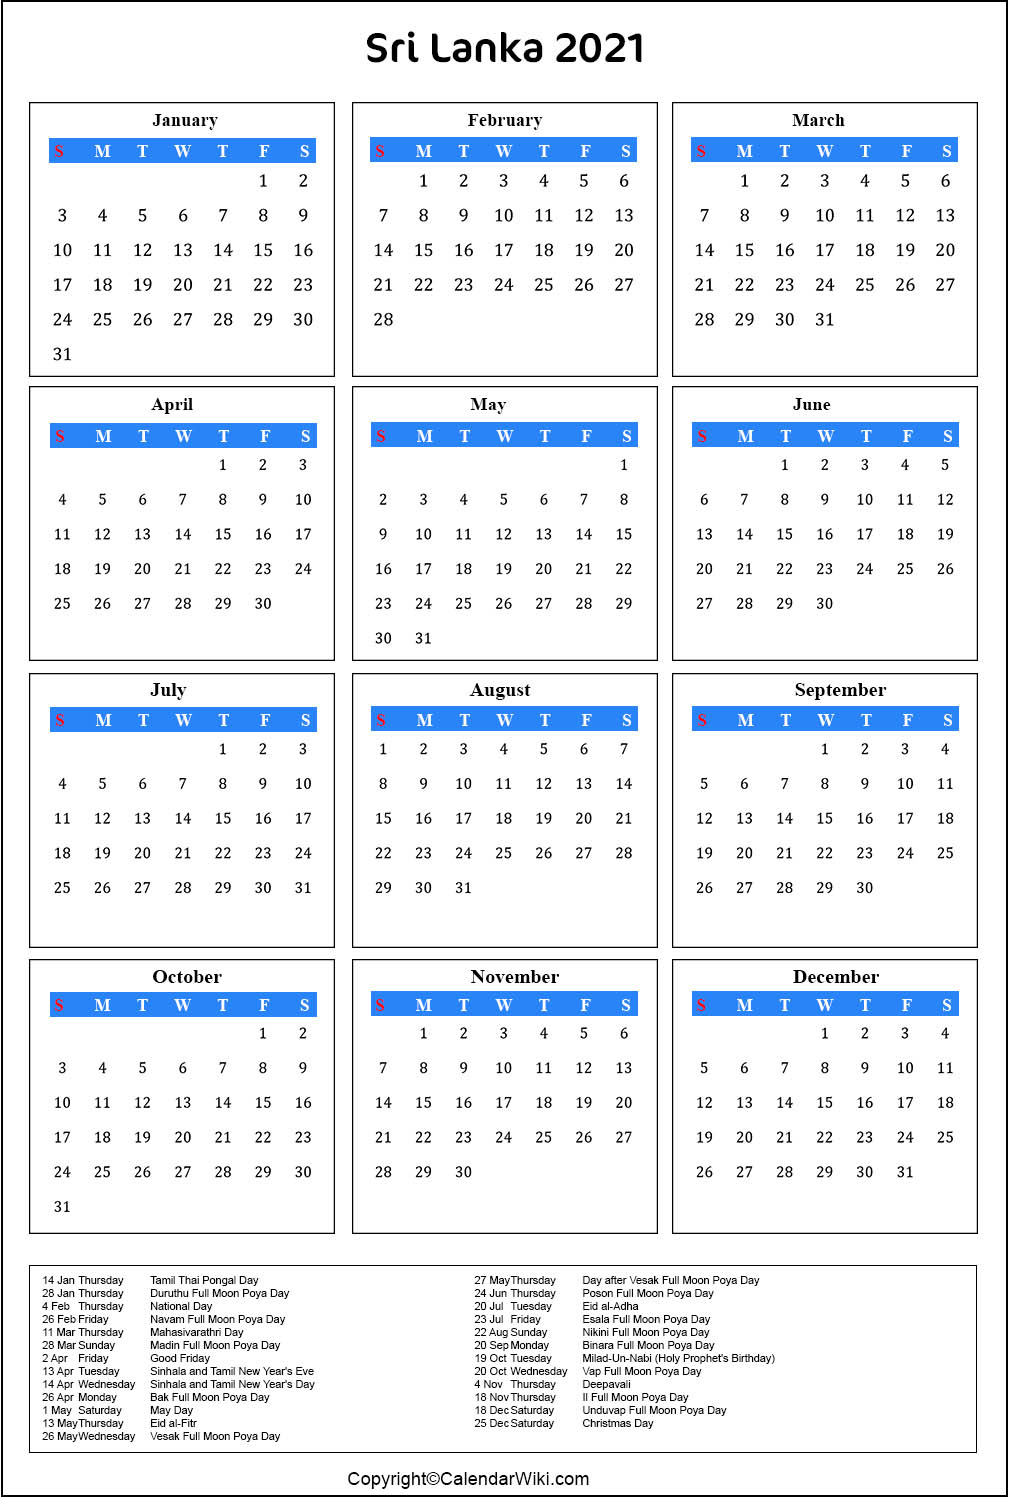 Printable Srilanka Calendar 2021 with Holidays [Public Holidays]